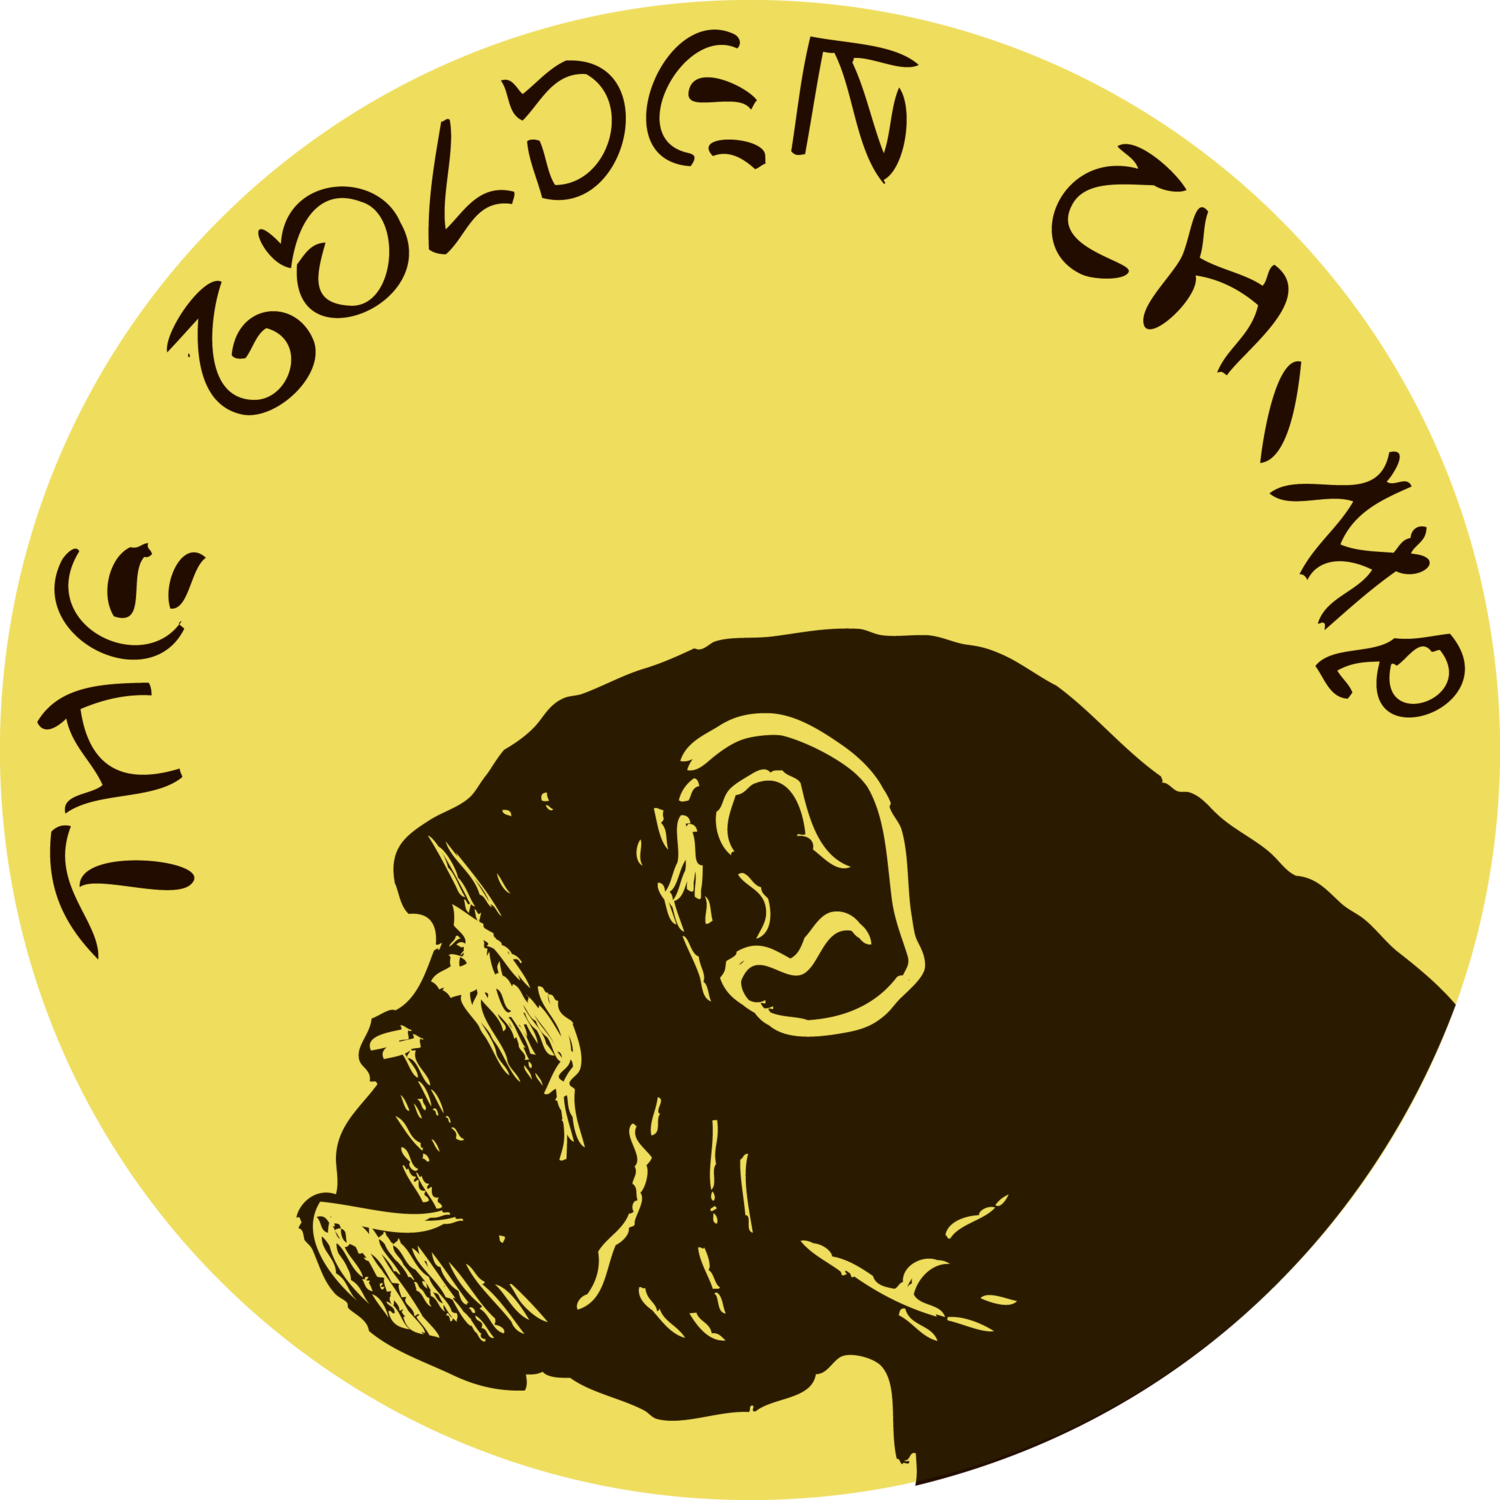 The Golden Chimp